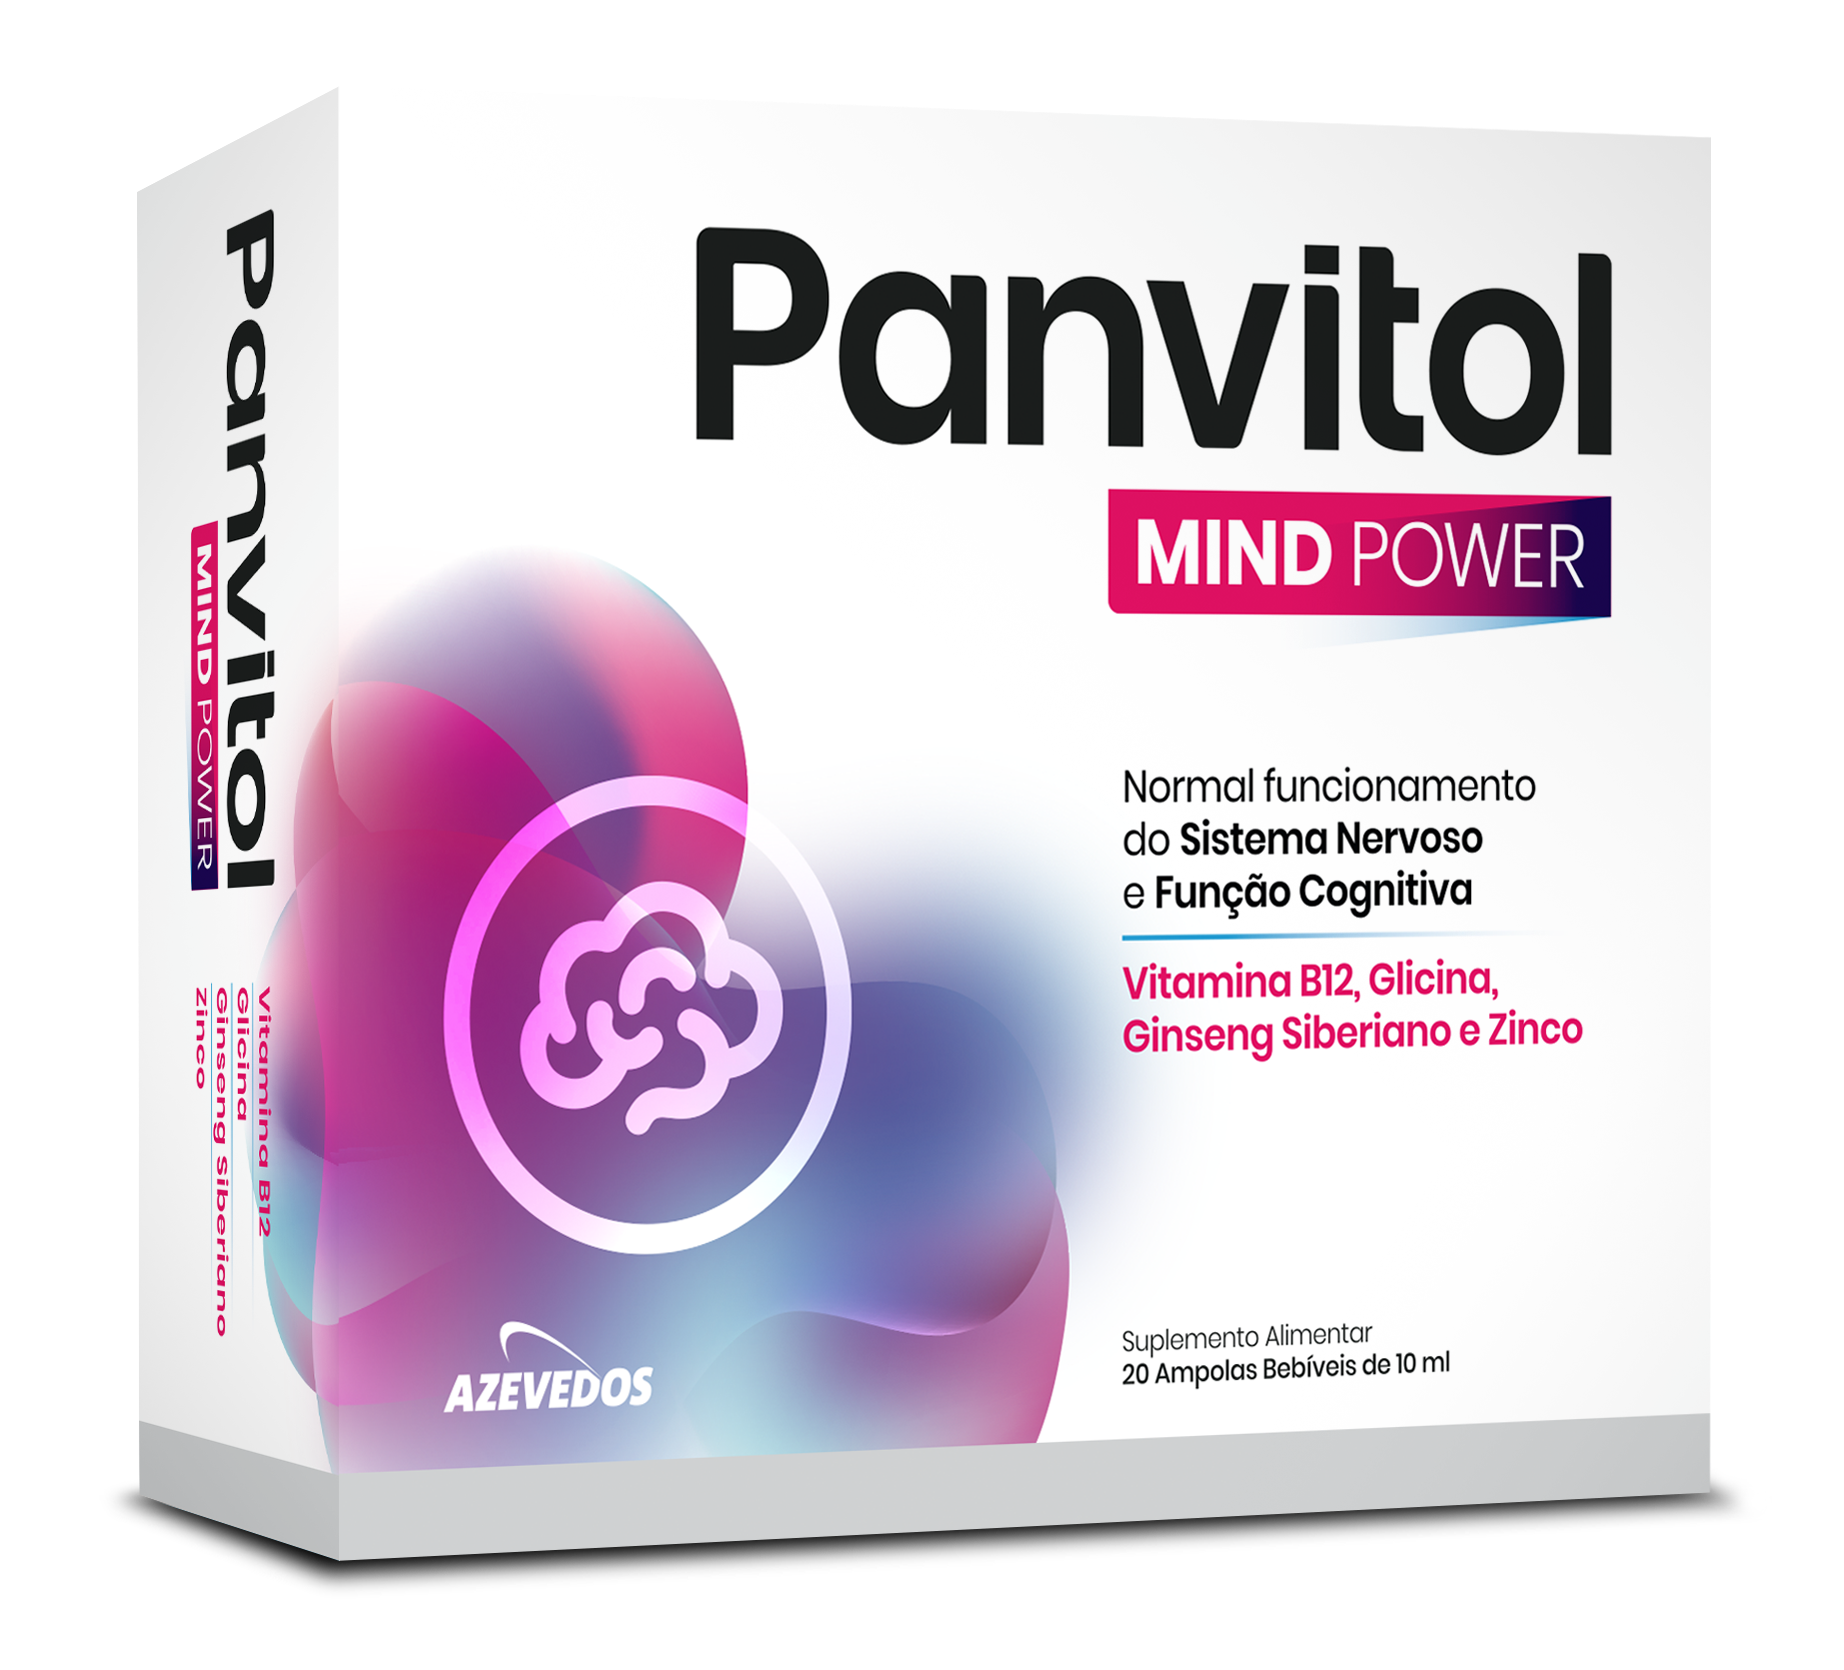 Panvitol Mind Power